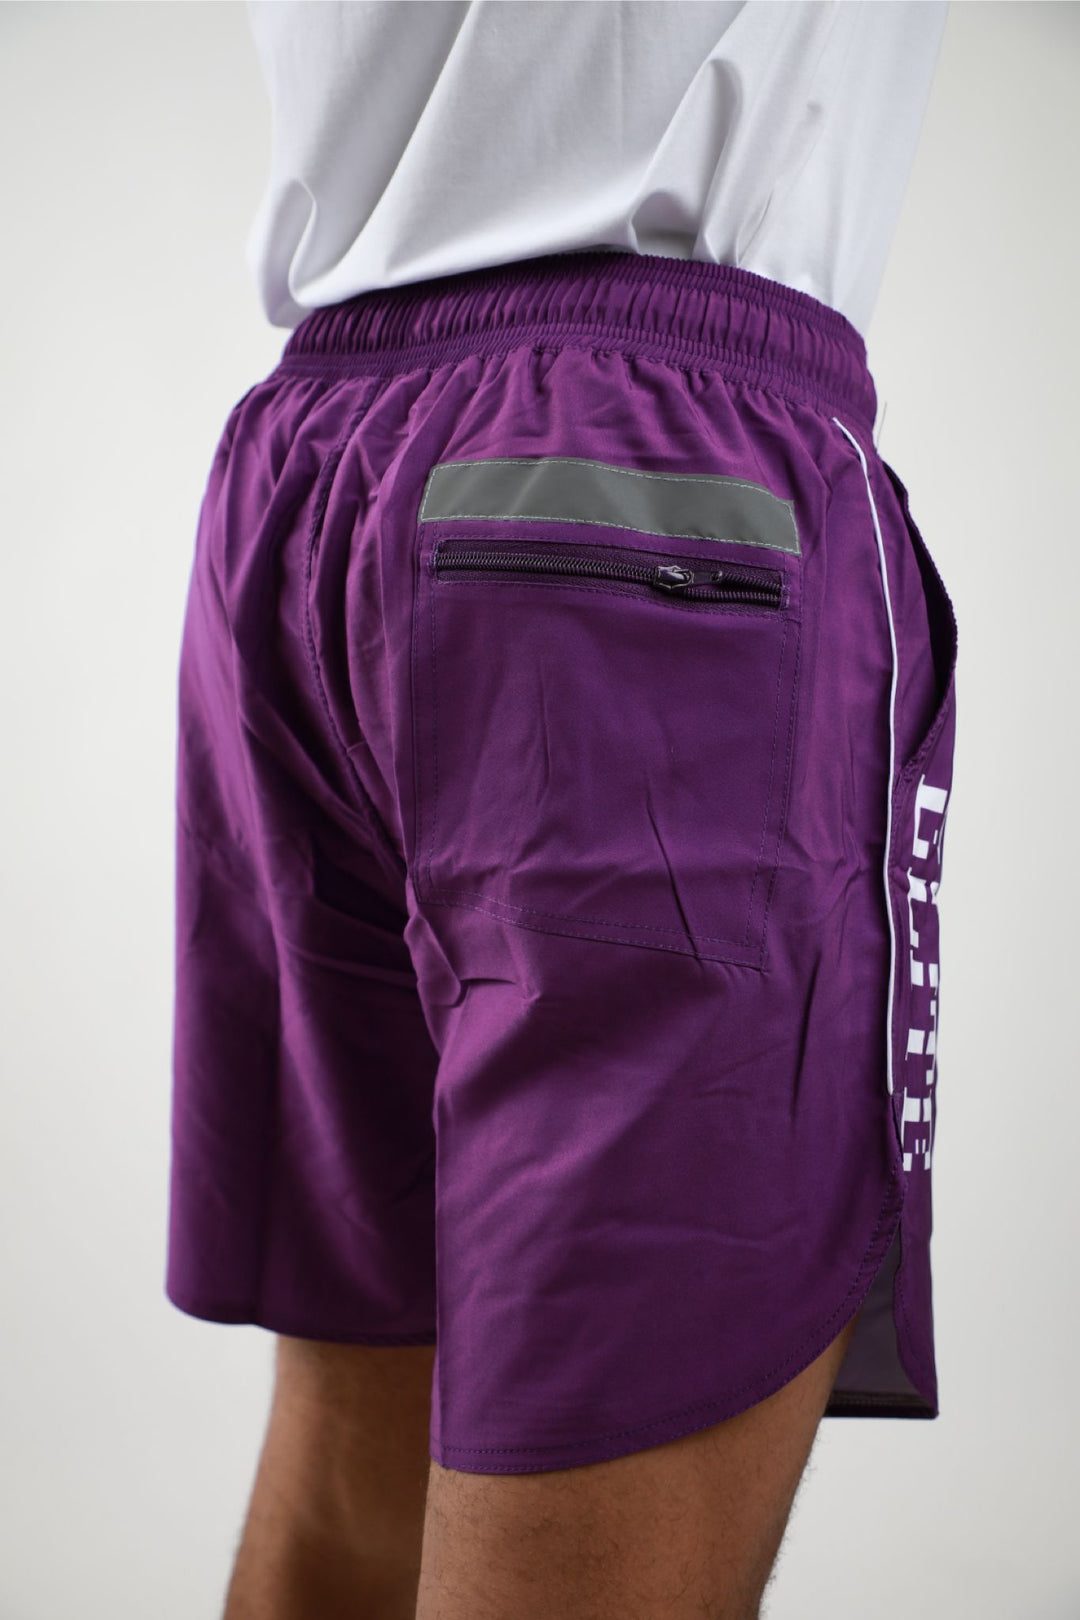 Elite Shorts  - Purple